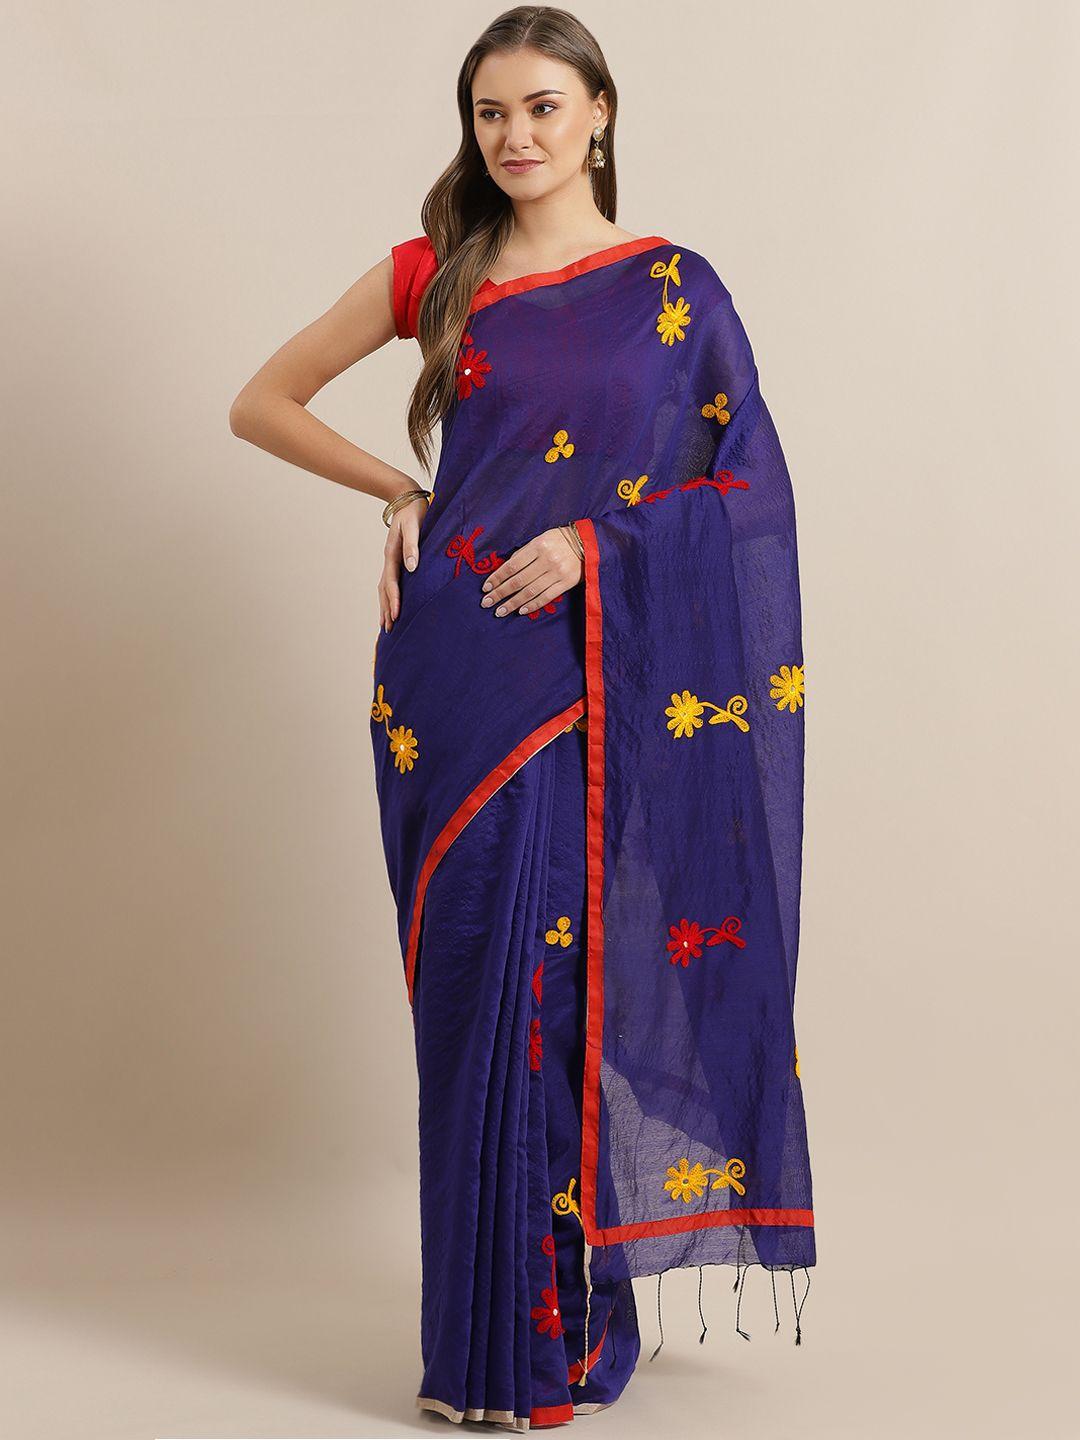 laa calcutta navy blue & red handloom embroidered saree